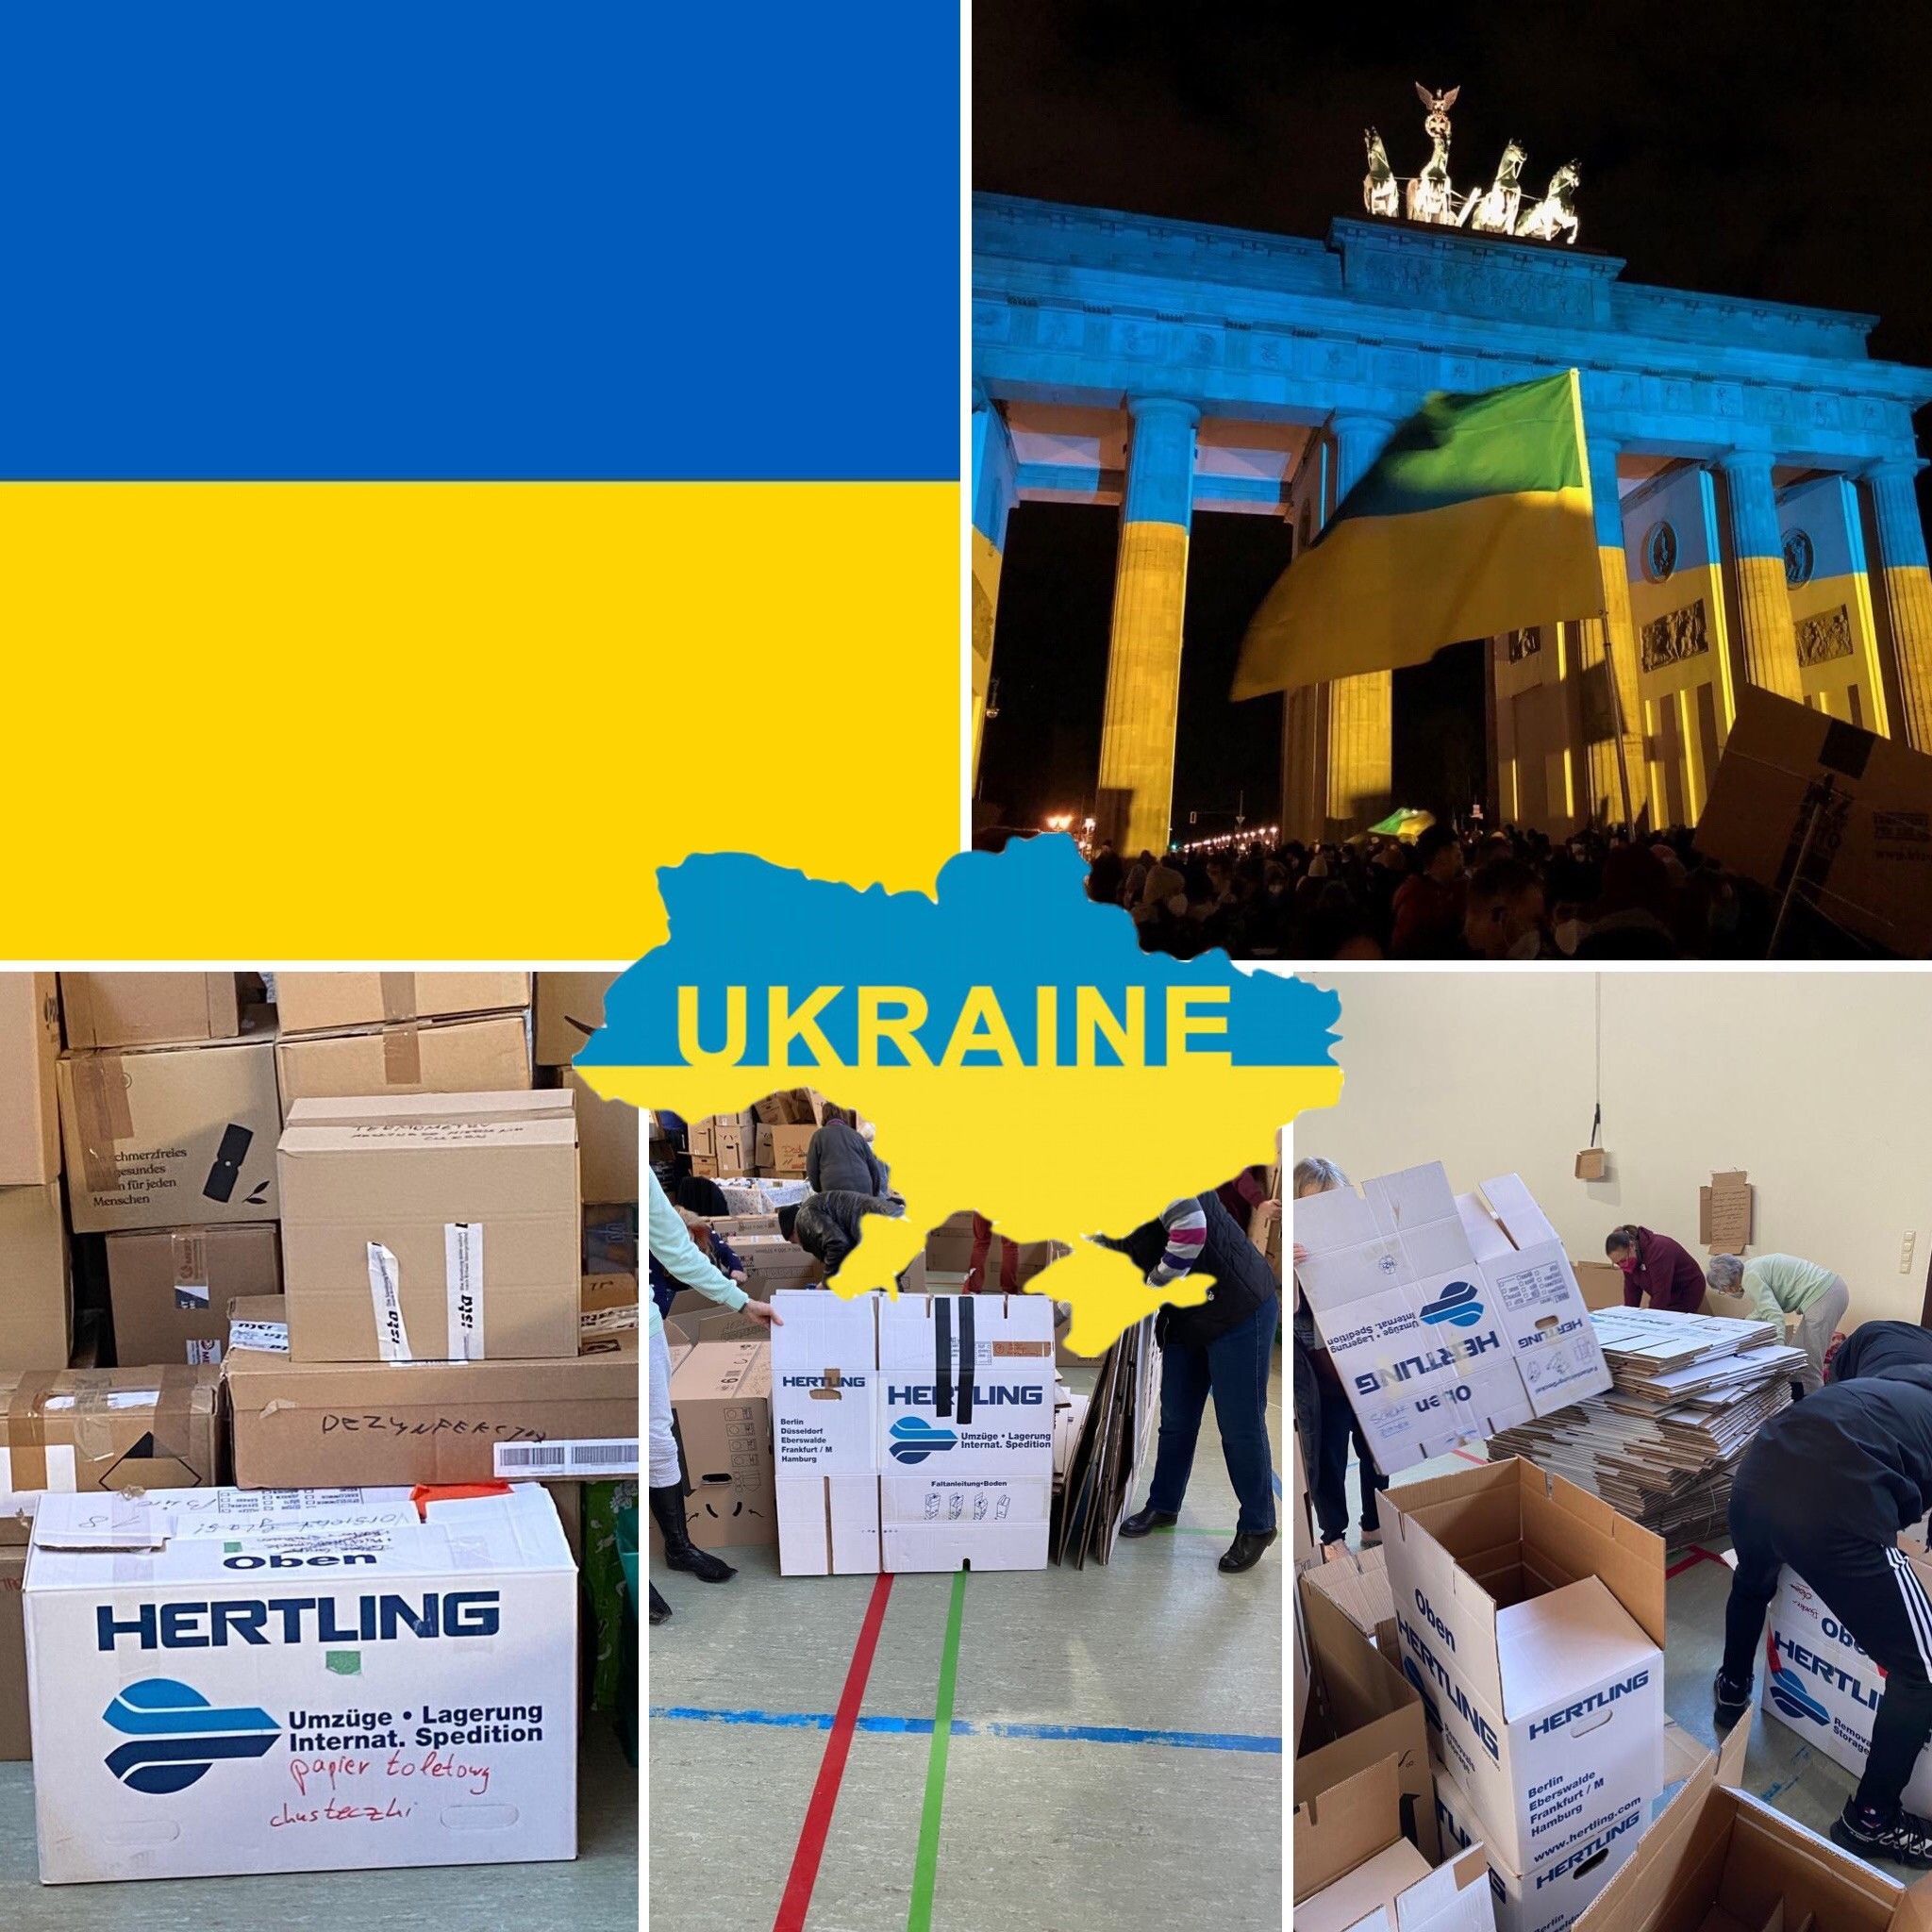 HERTLING donations for the Ukraine